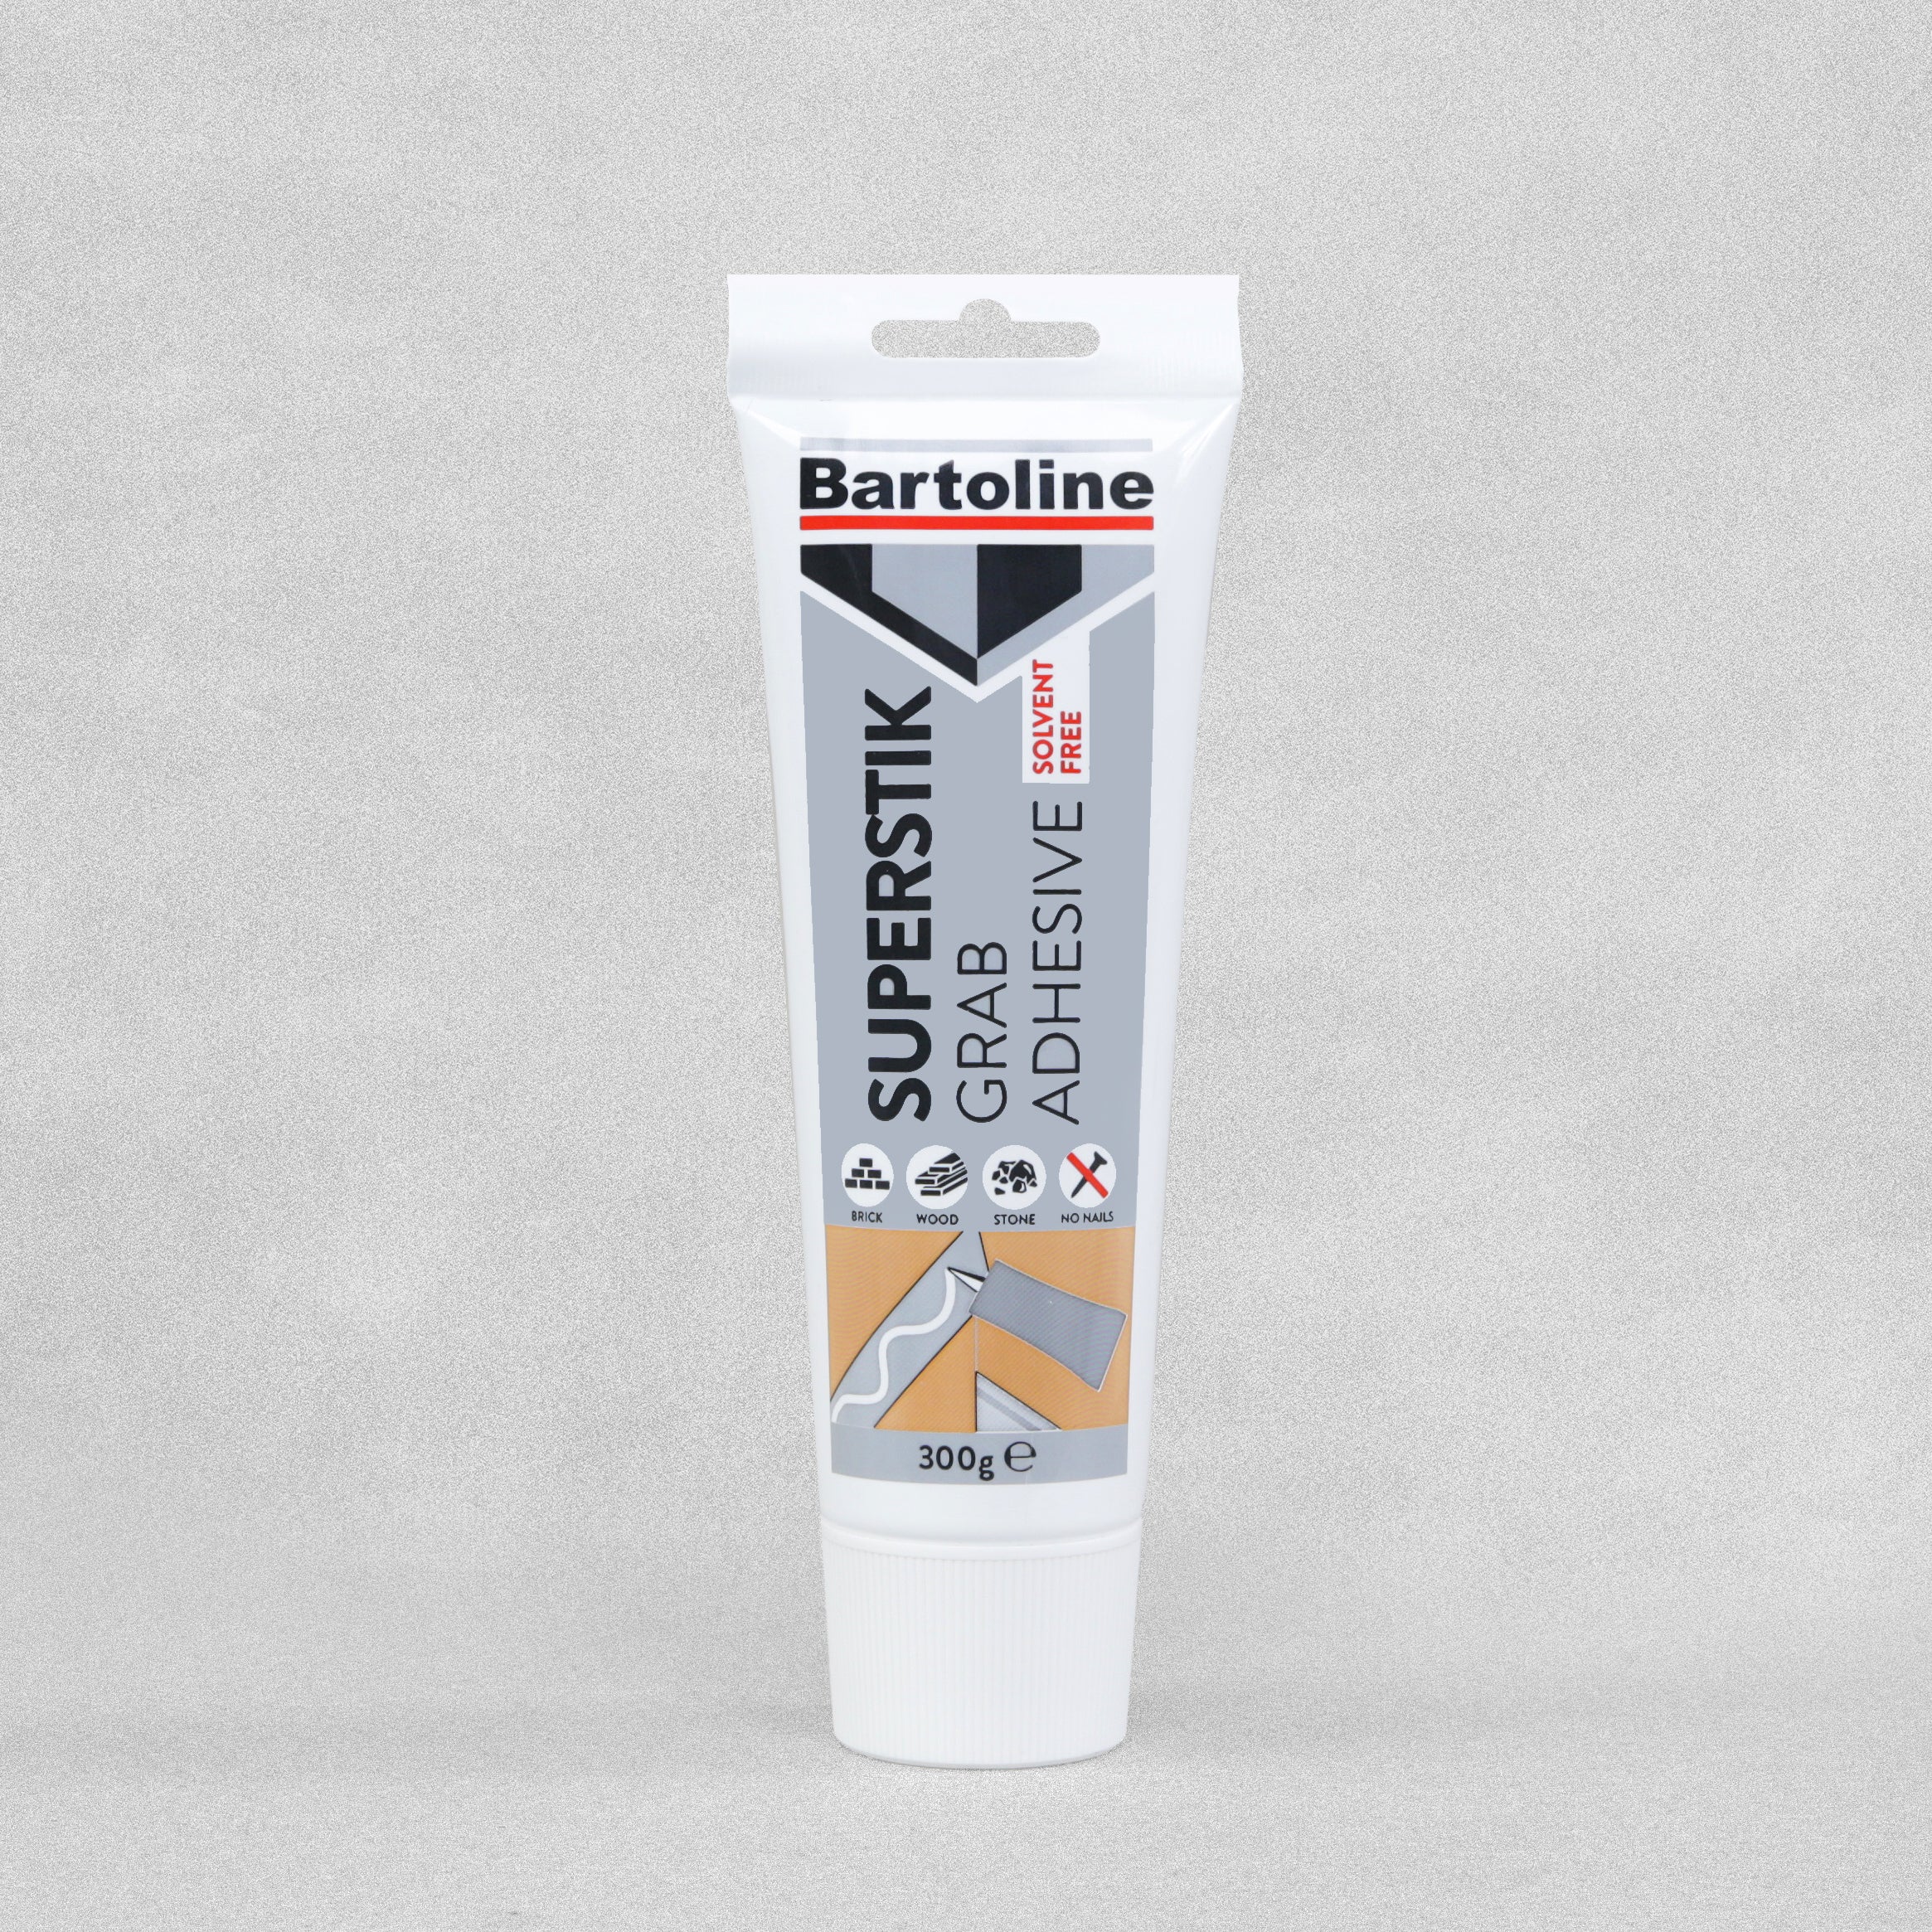 Bartoline Superstik Grab Adhesive - 300g